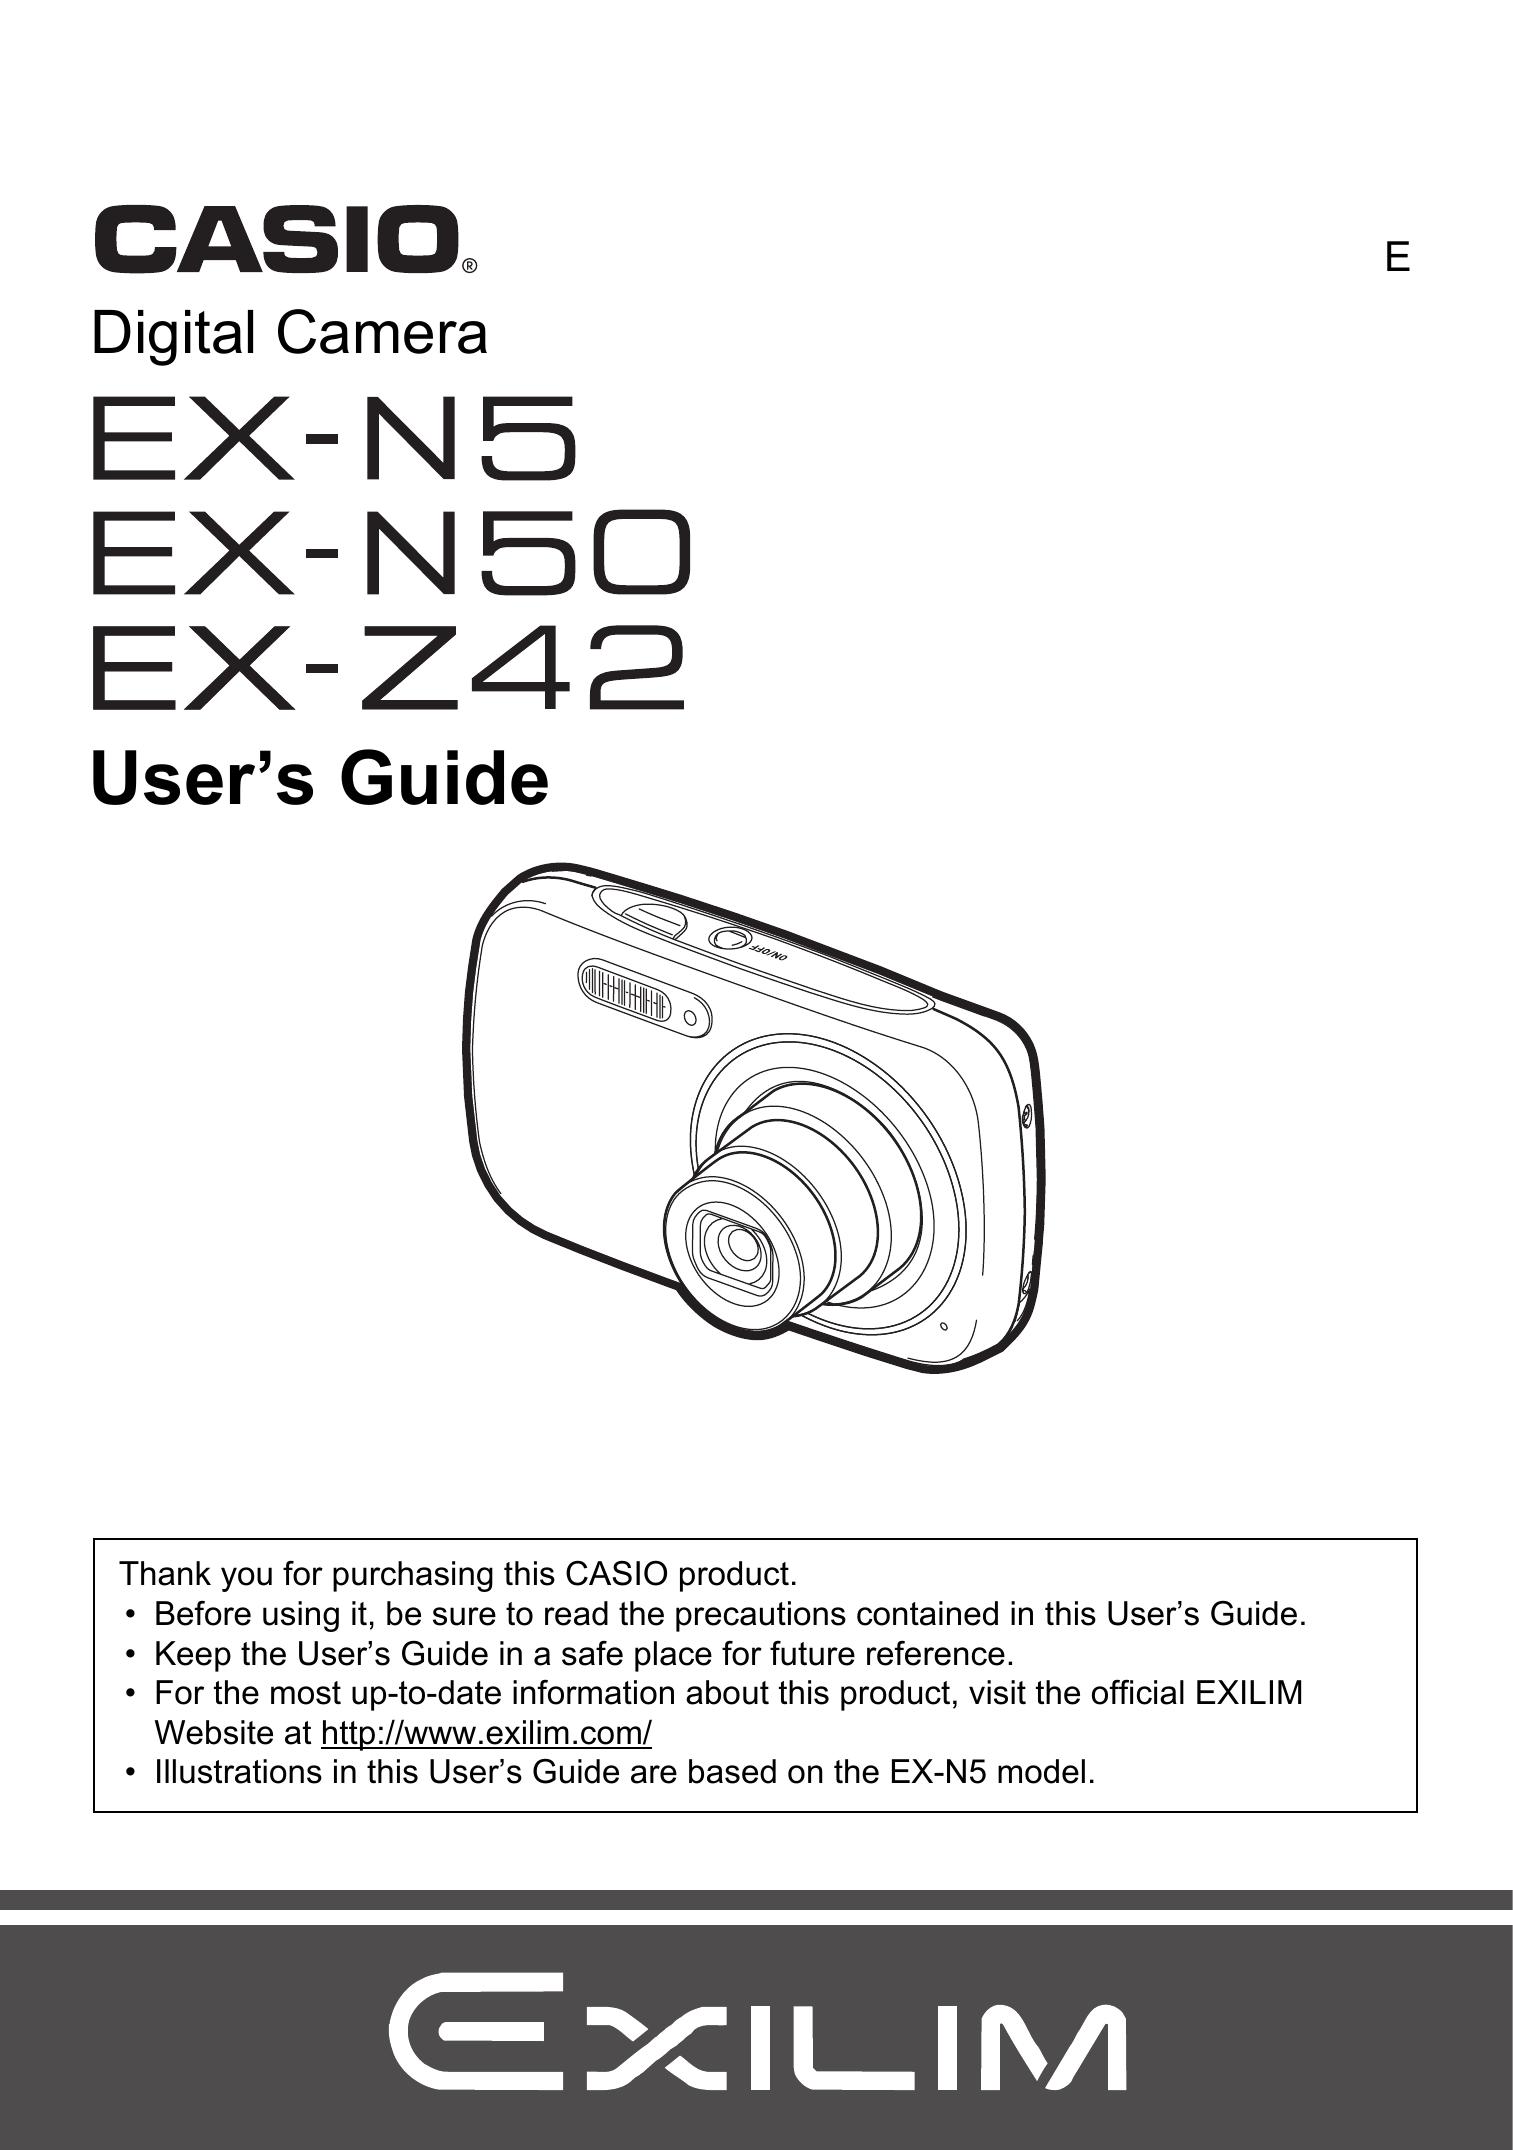 Casio EX-N50 Digital Camera User Manual